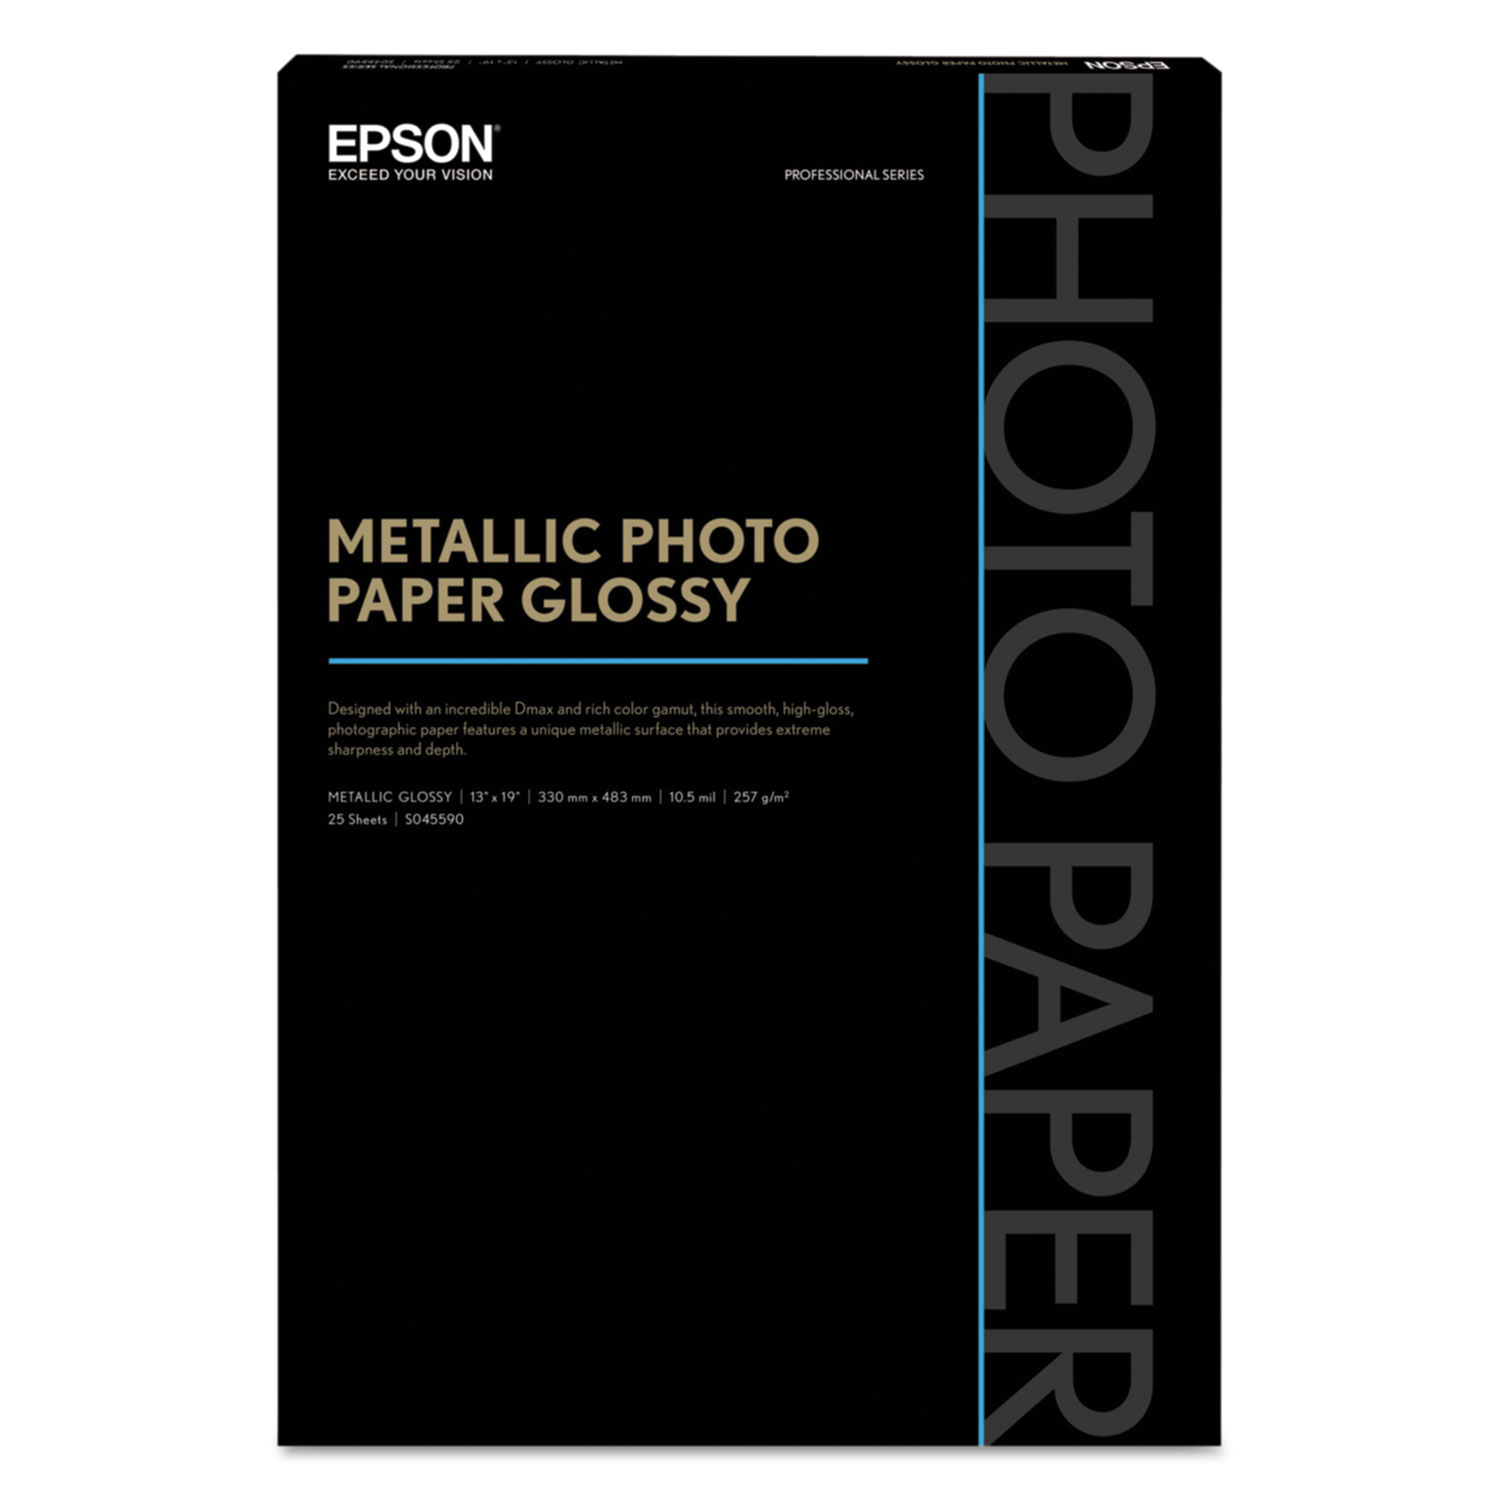 Professional Media Metallic Photo Paper Glossy, White, 13 x 19, 25 Sheets/Pack